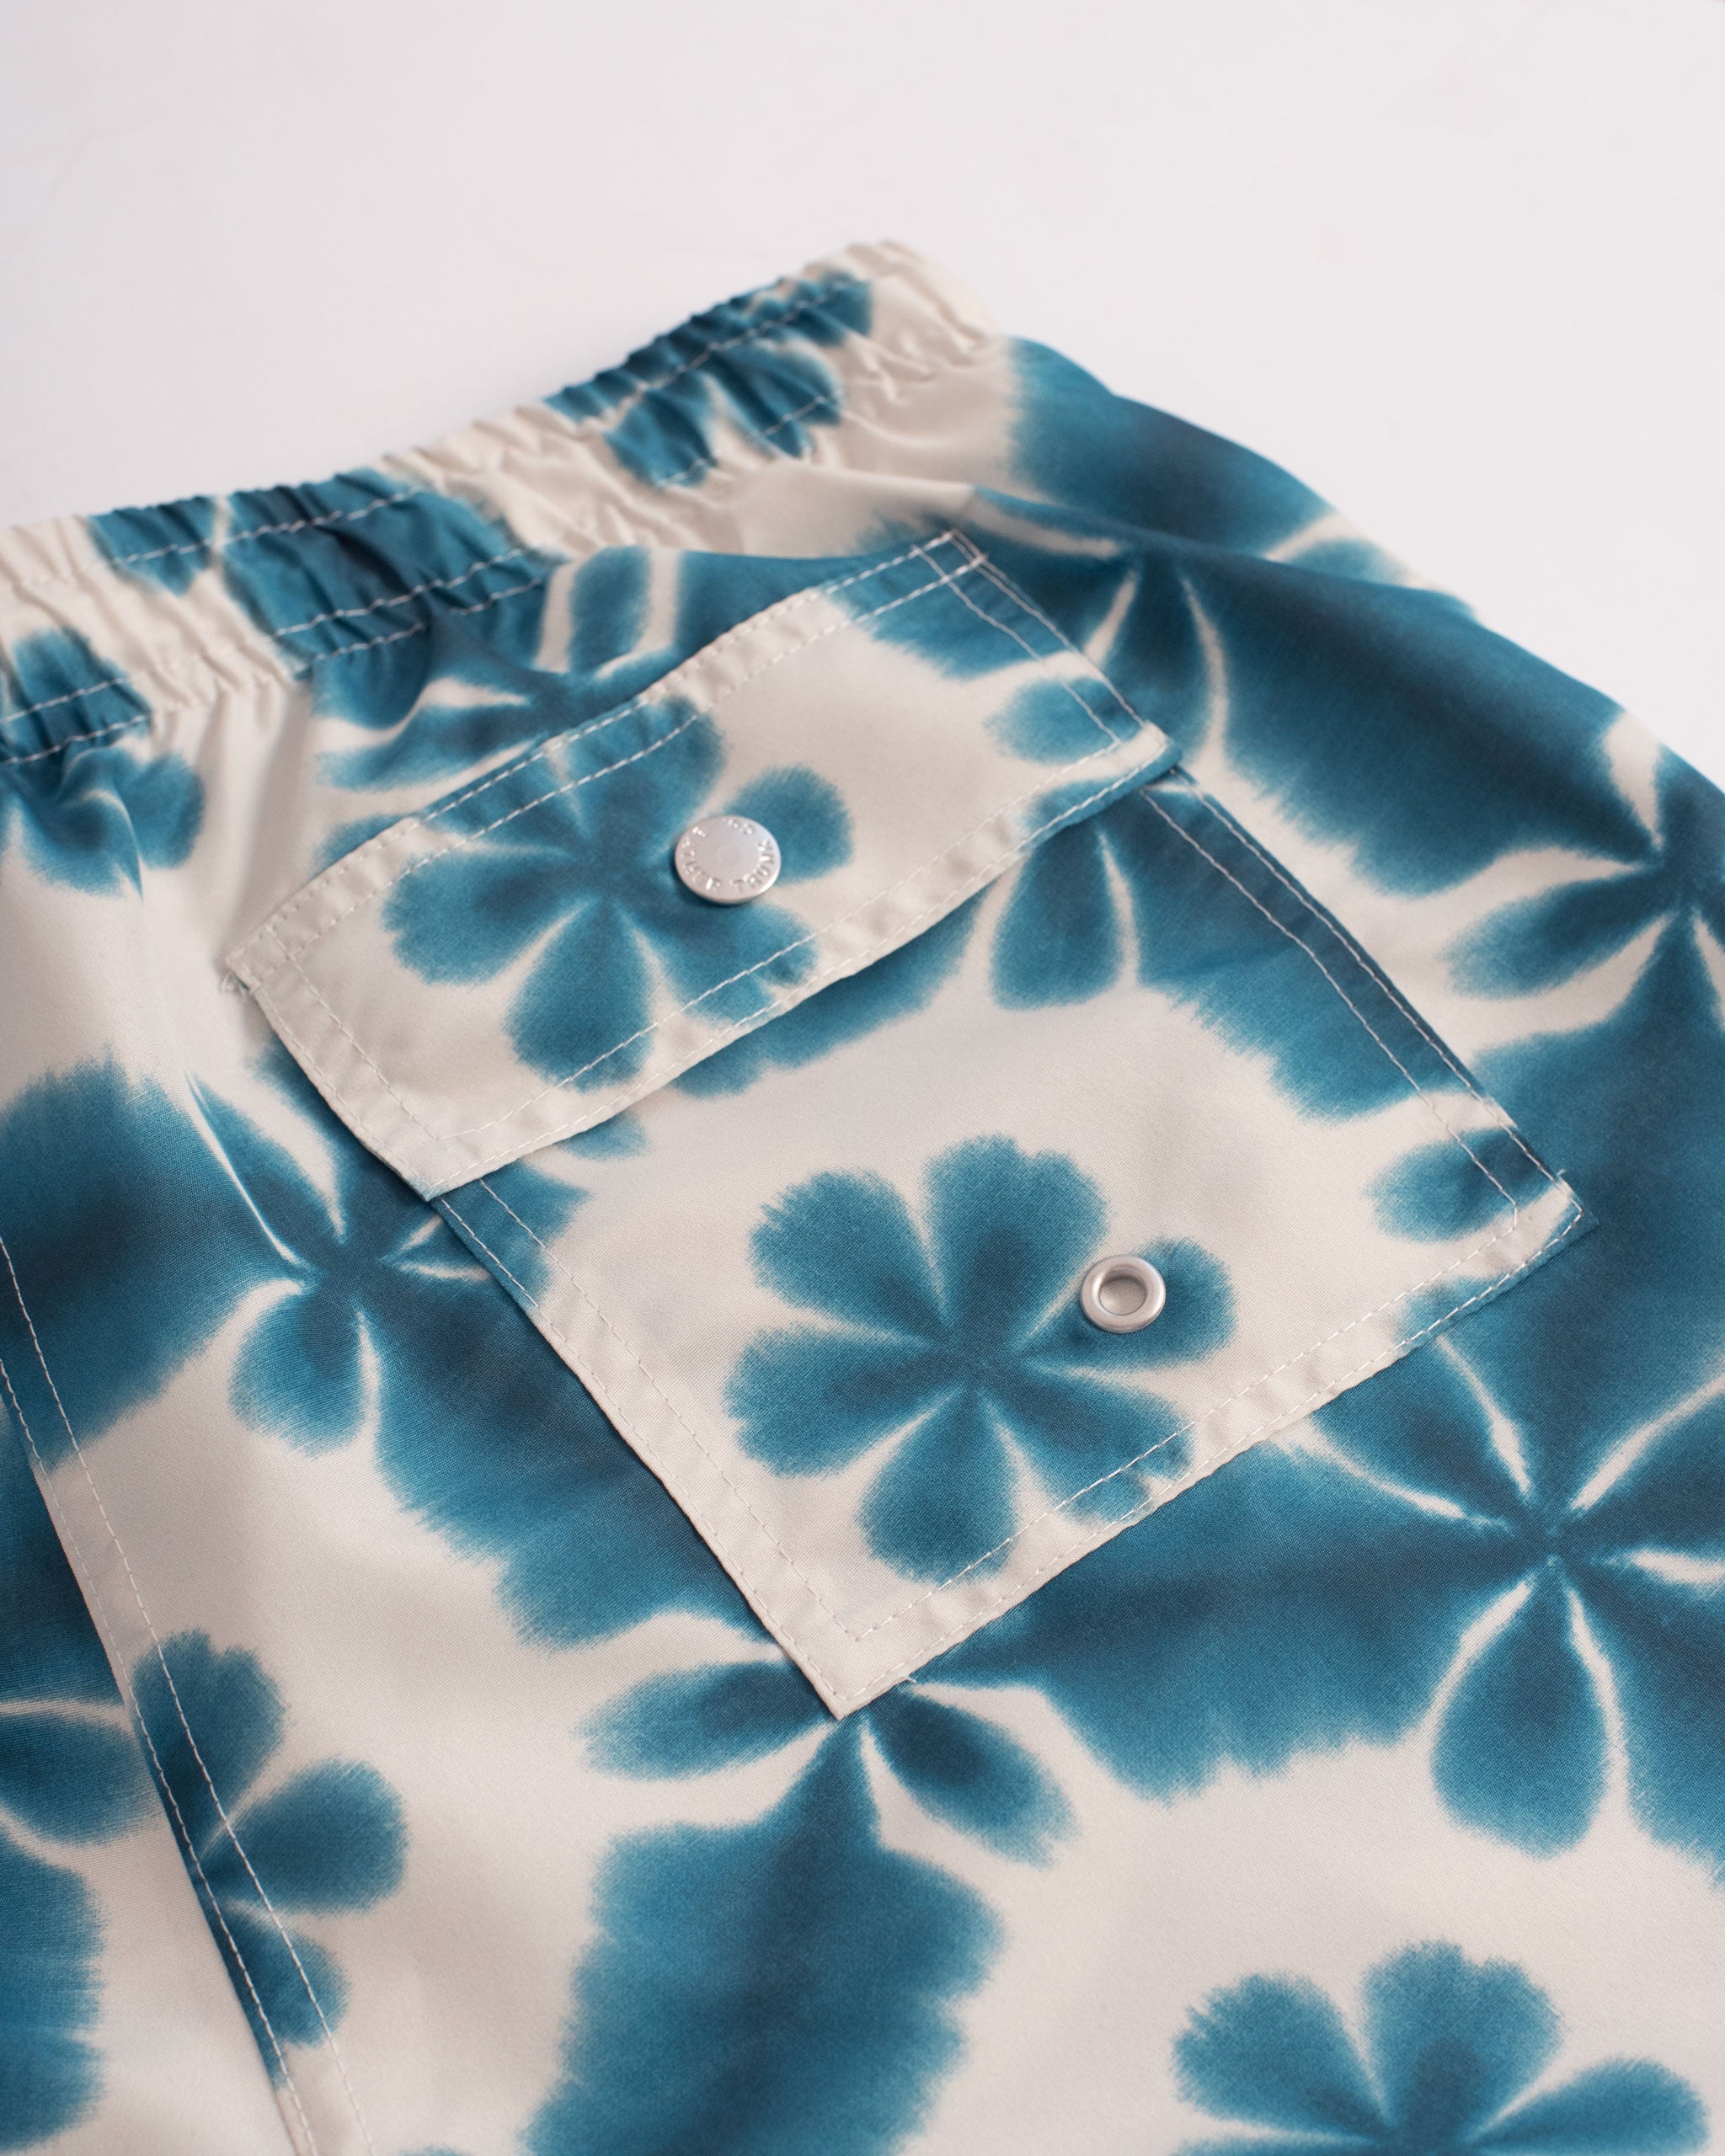 Back Pocket Shot of A blue swim trunk with a shibori inspired pattern, similar to a kaleidoscope